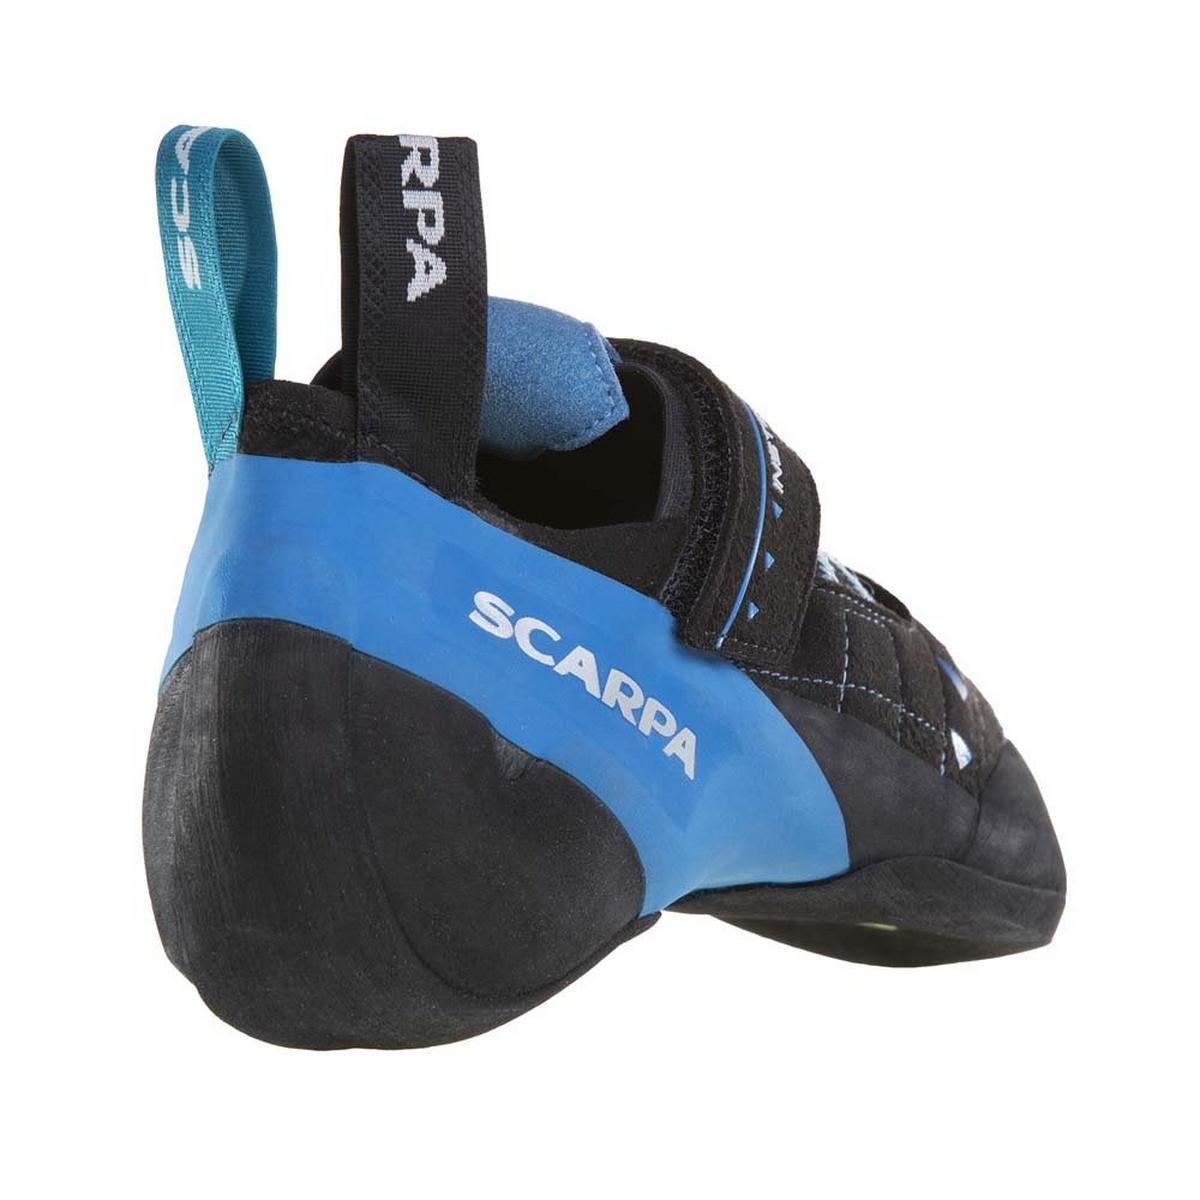 Scarpa Unisex Instinct VS-R Climbing Shoe